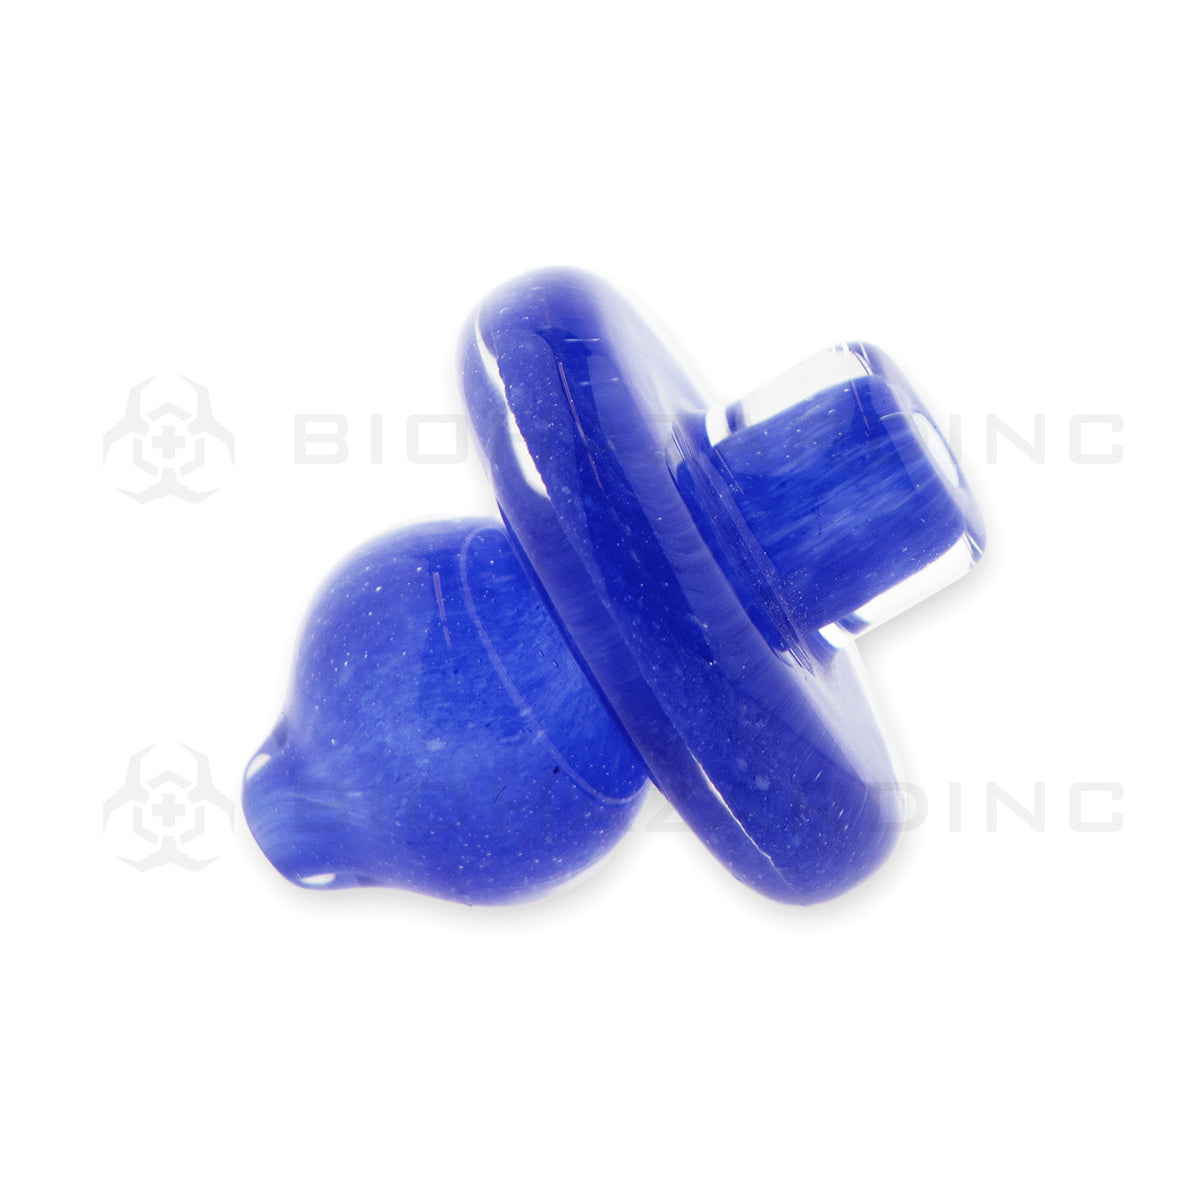 Carb Cap | Glass Directional Bubble Carb Cap | Various Colors Carb Cap Biohazard Inc   